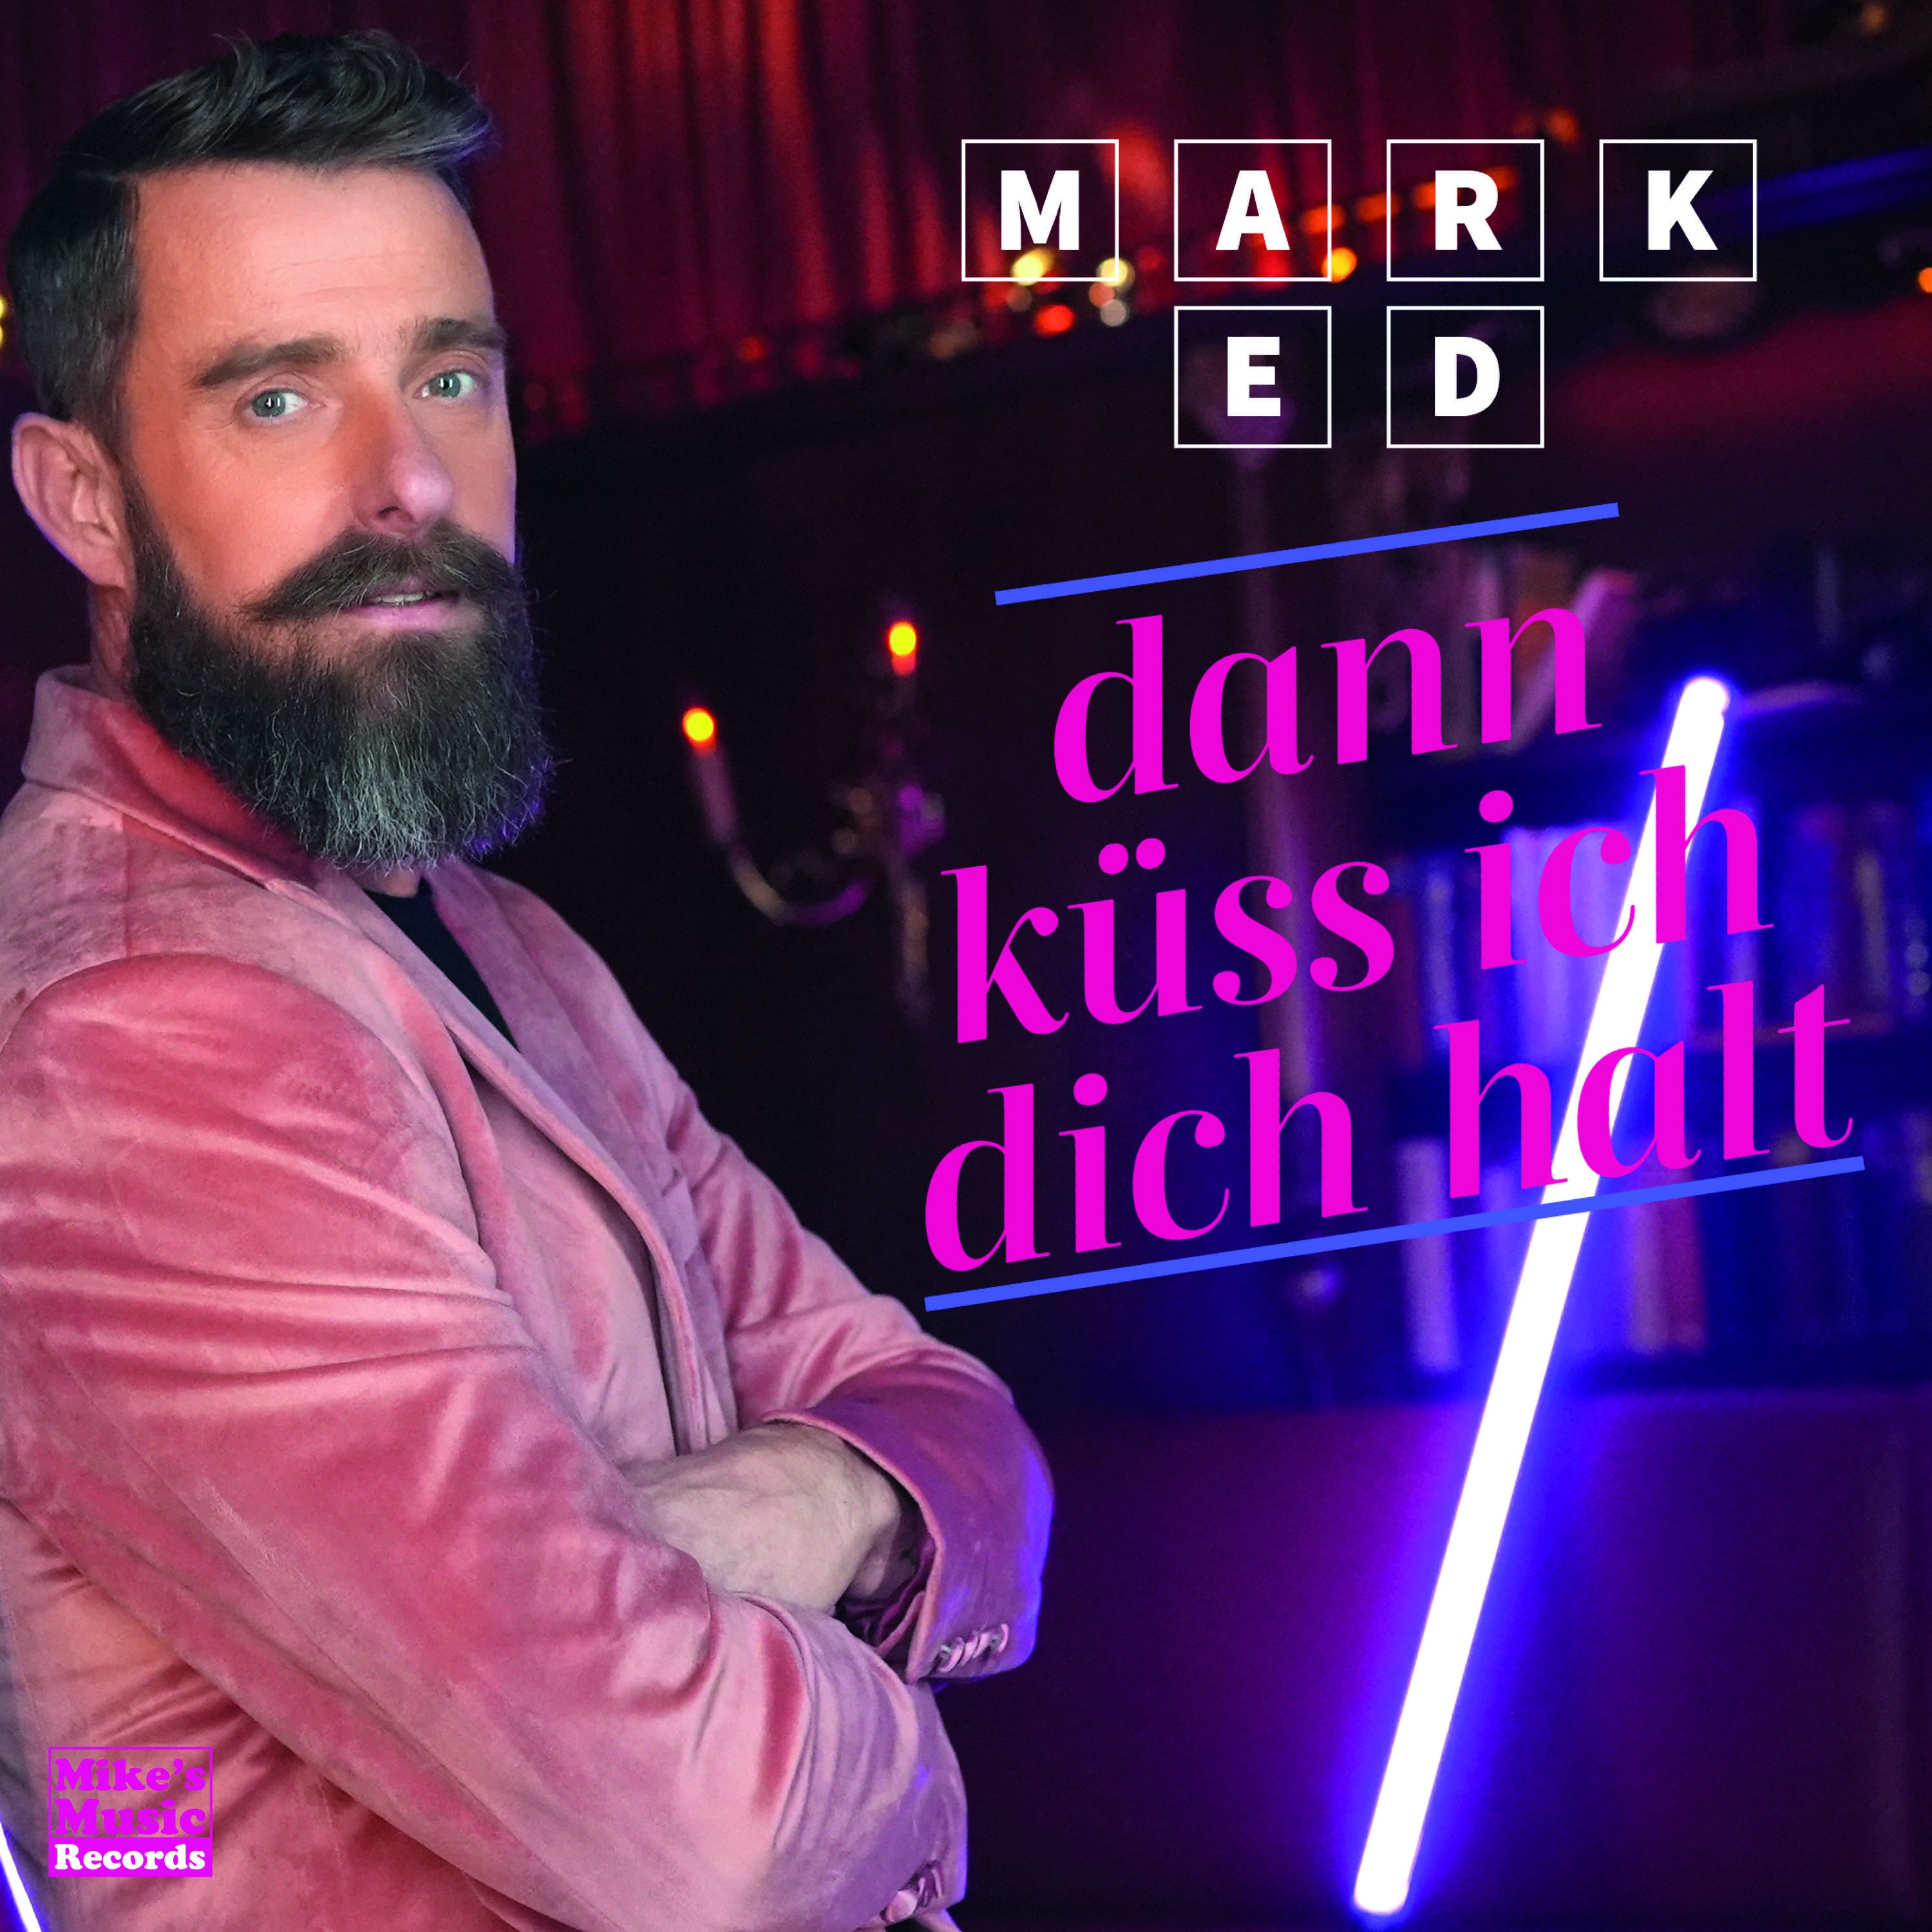 Mark Ed - Dann küss ich Dich halt